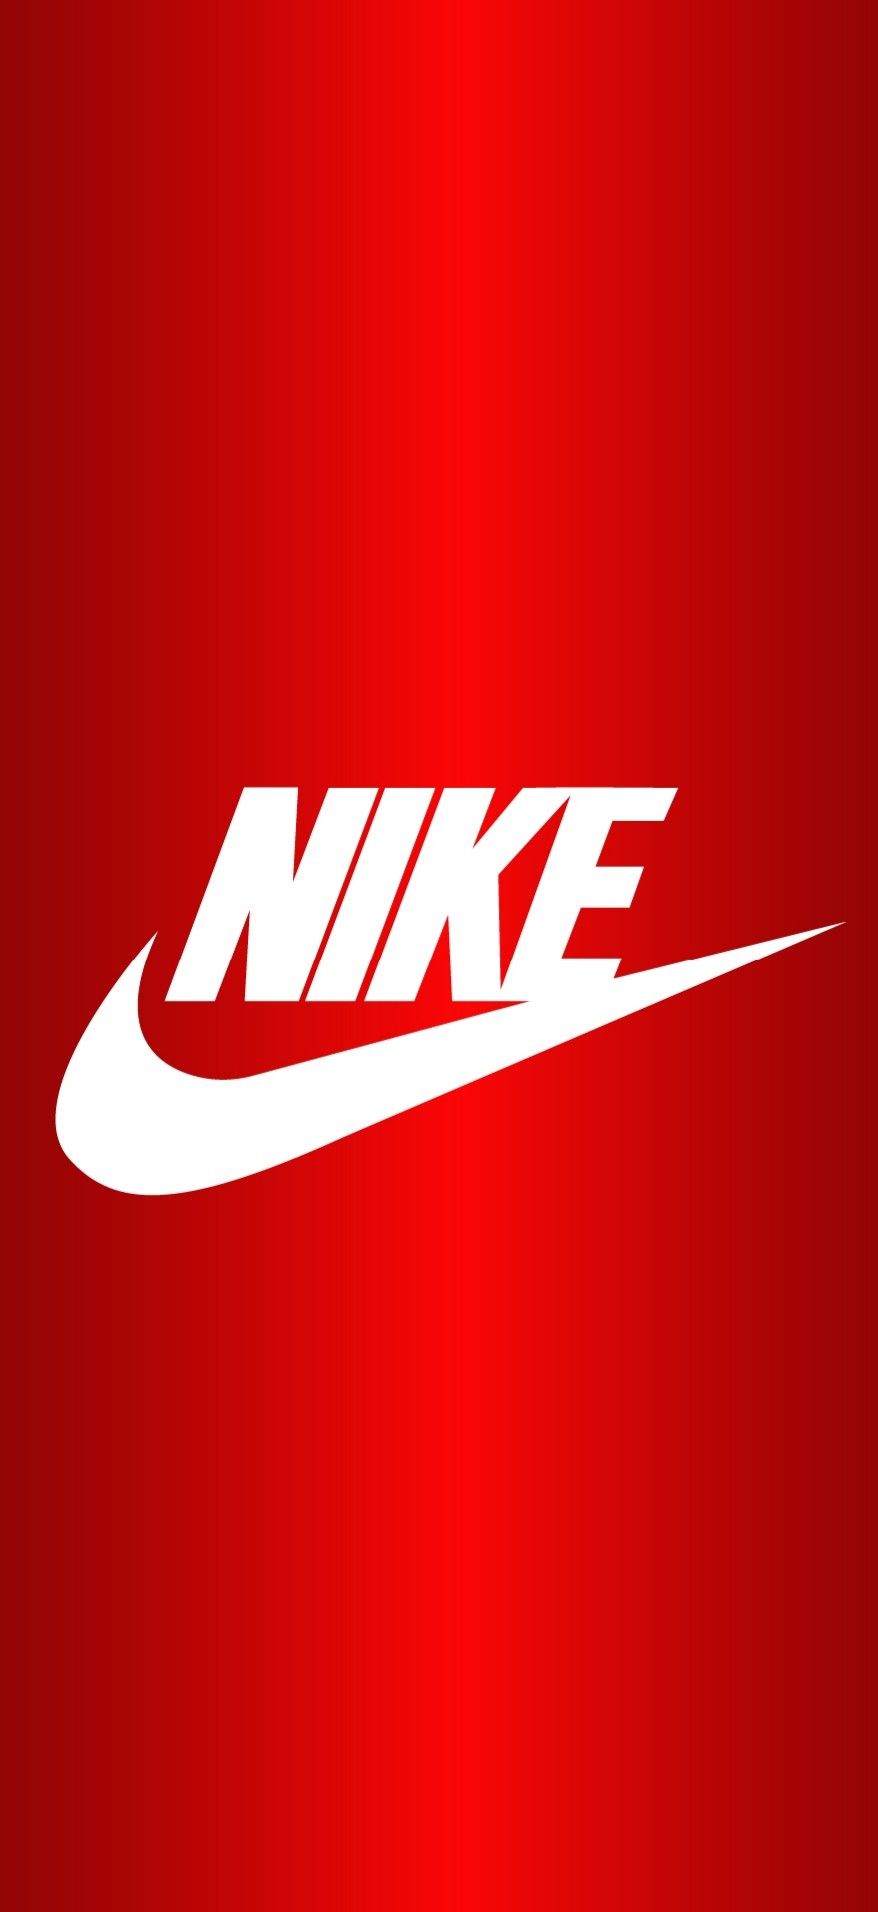 Nike ideas. nike wallpaper, nike, nike wallpaper iphone